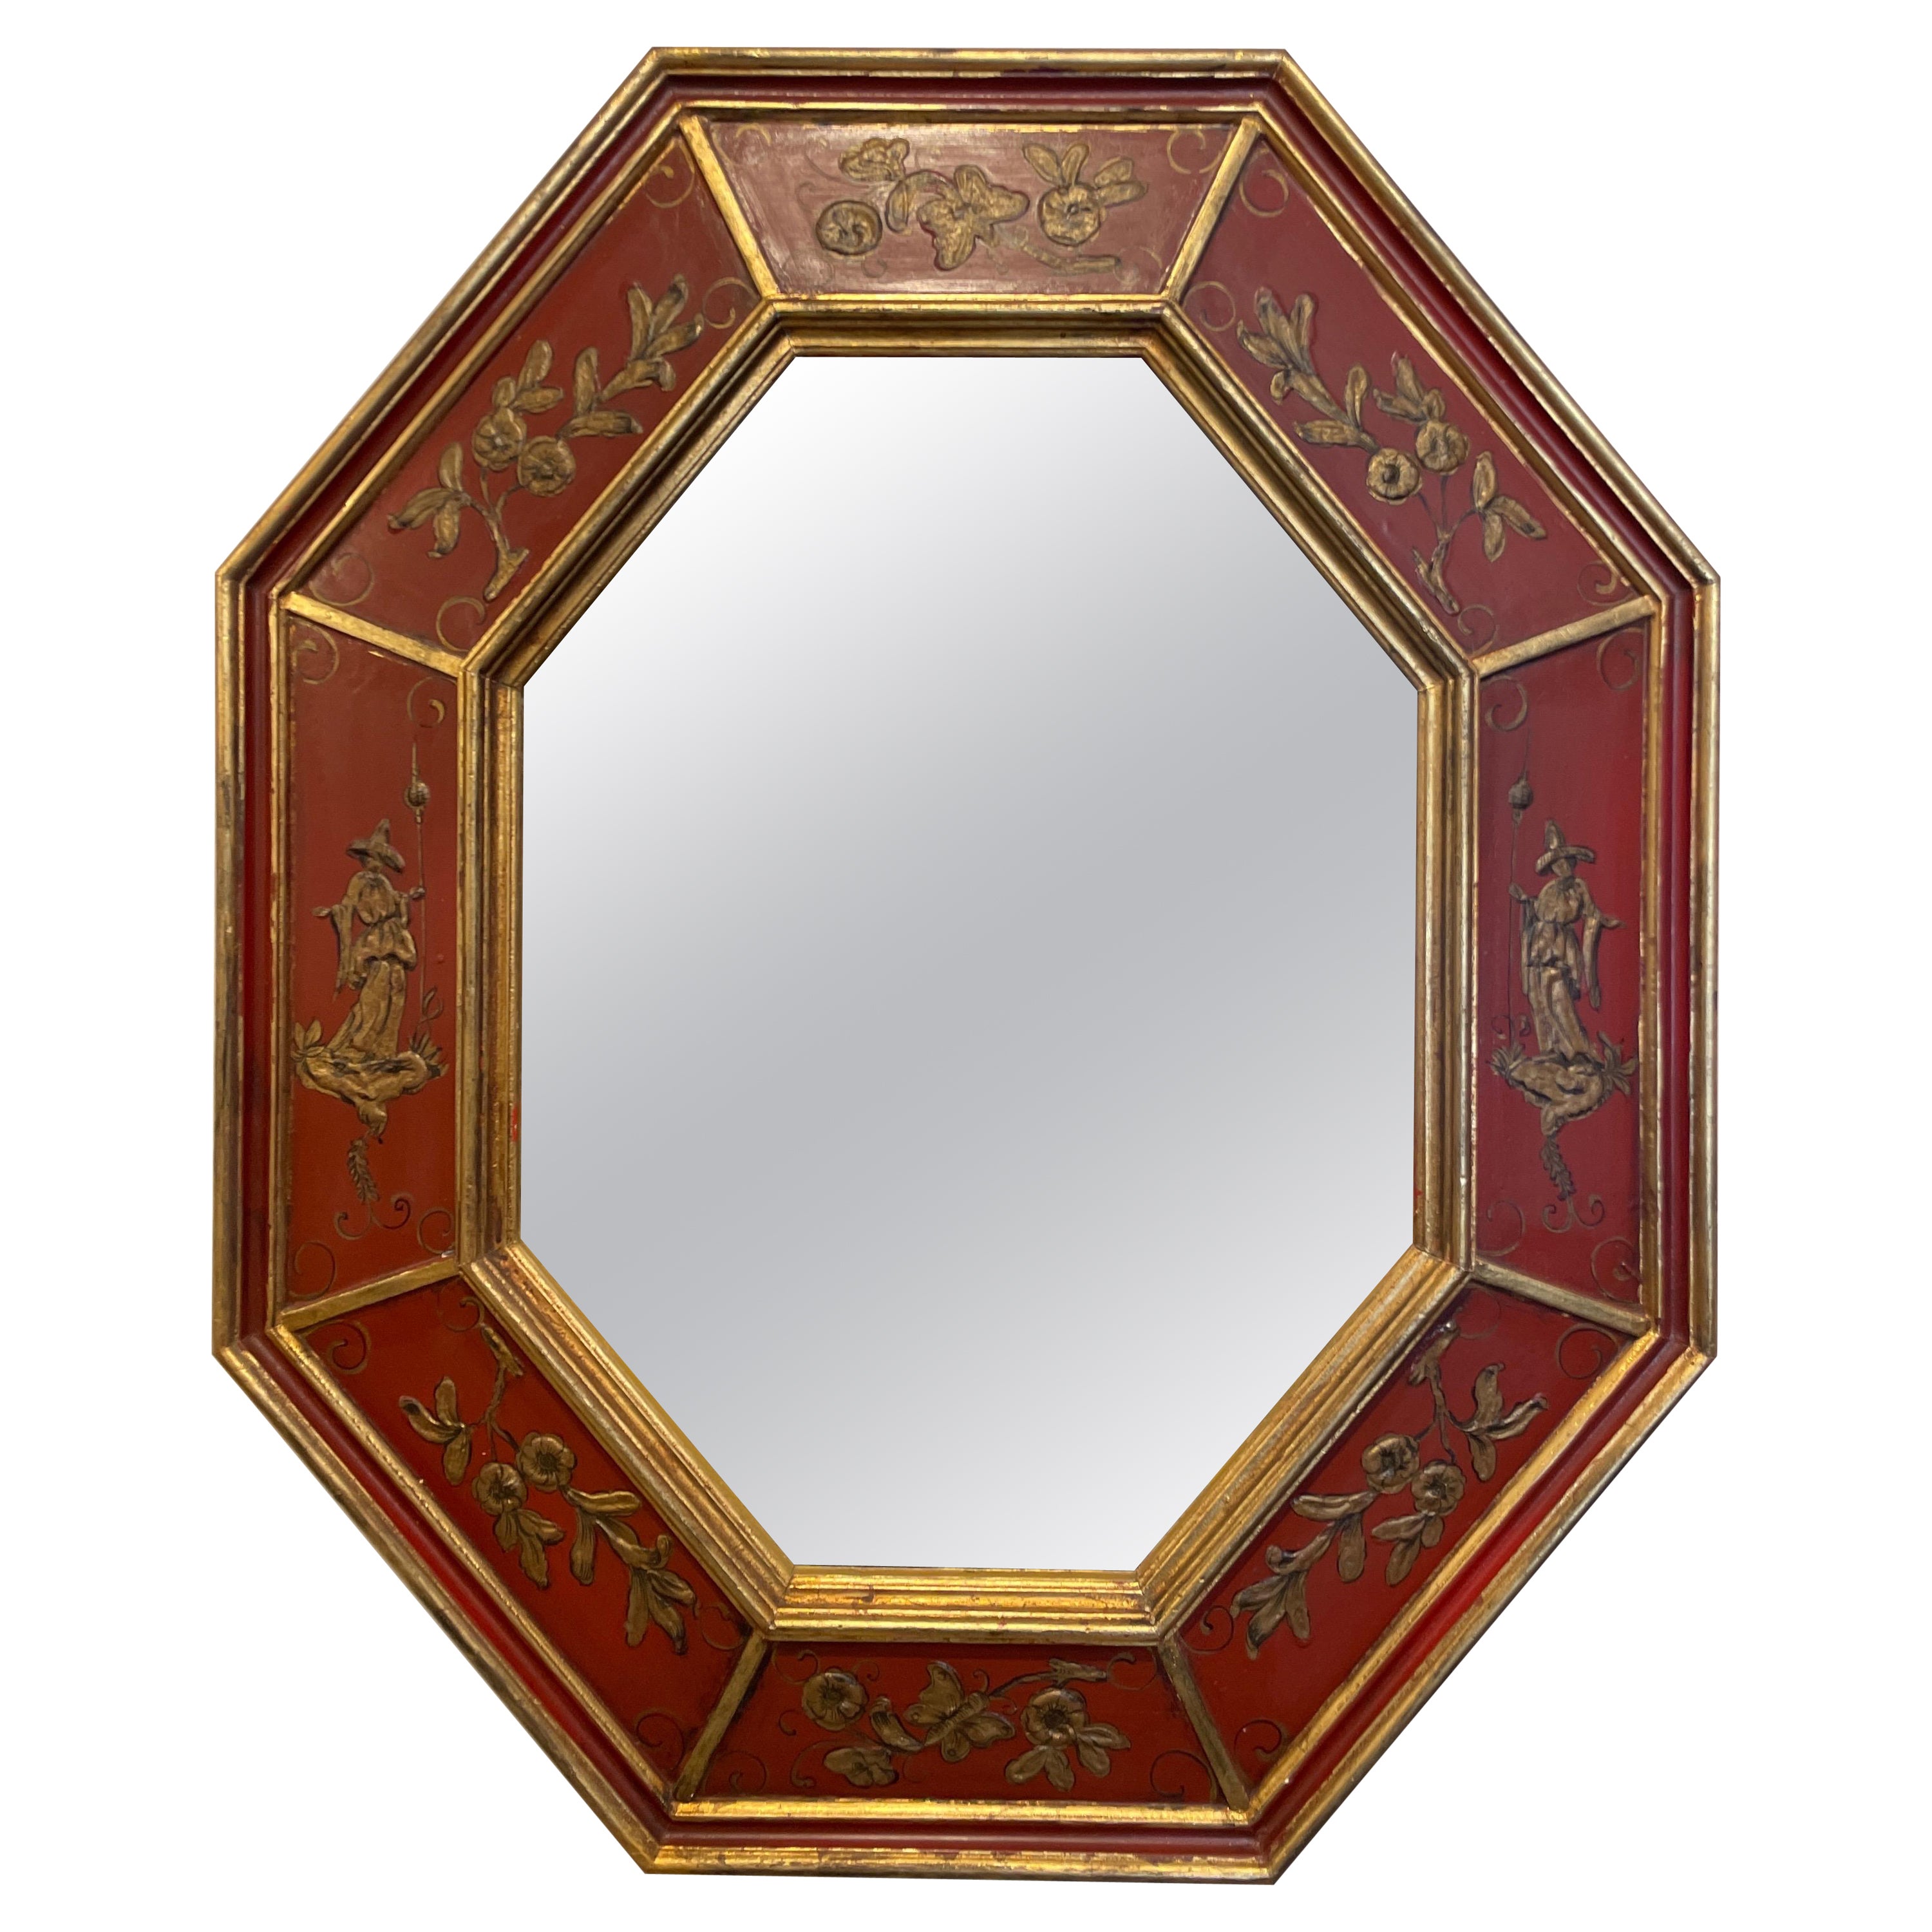 Vieux miroir italien octogonal chinoiserie